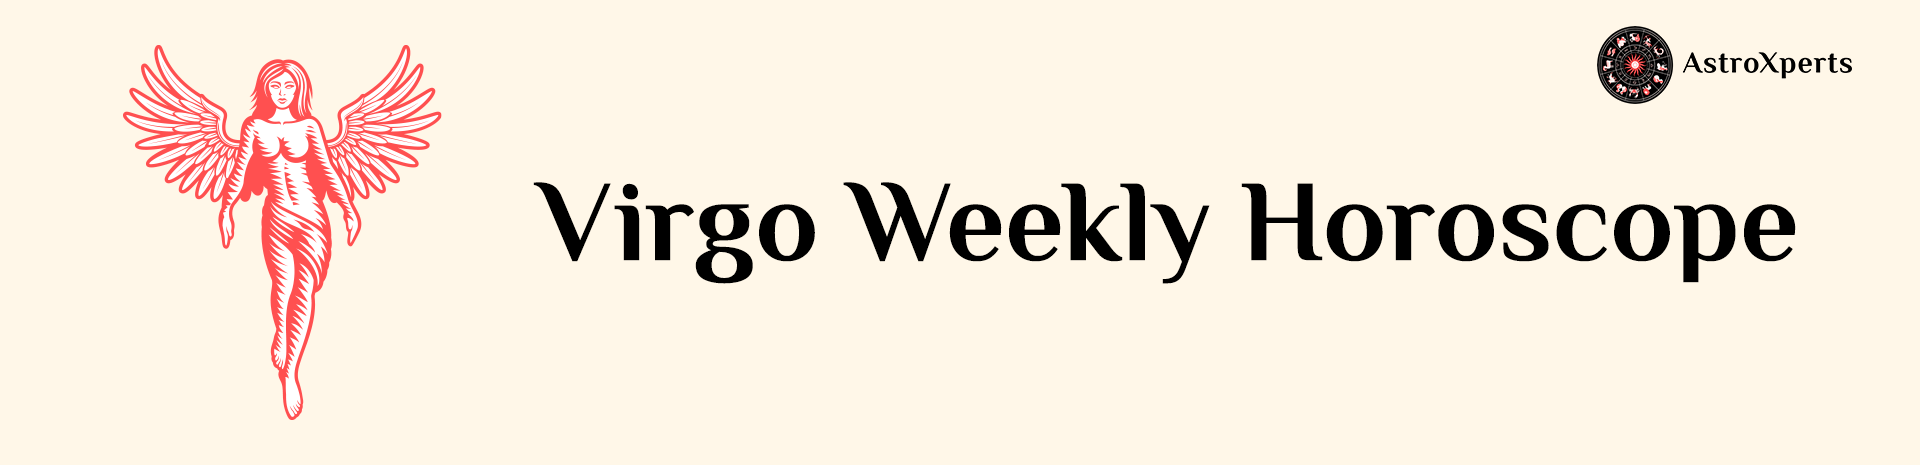 Virgo Weekly